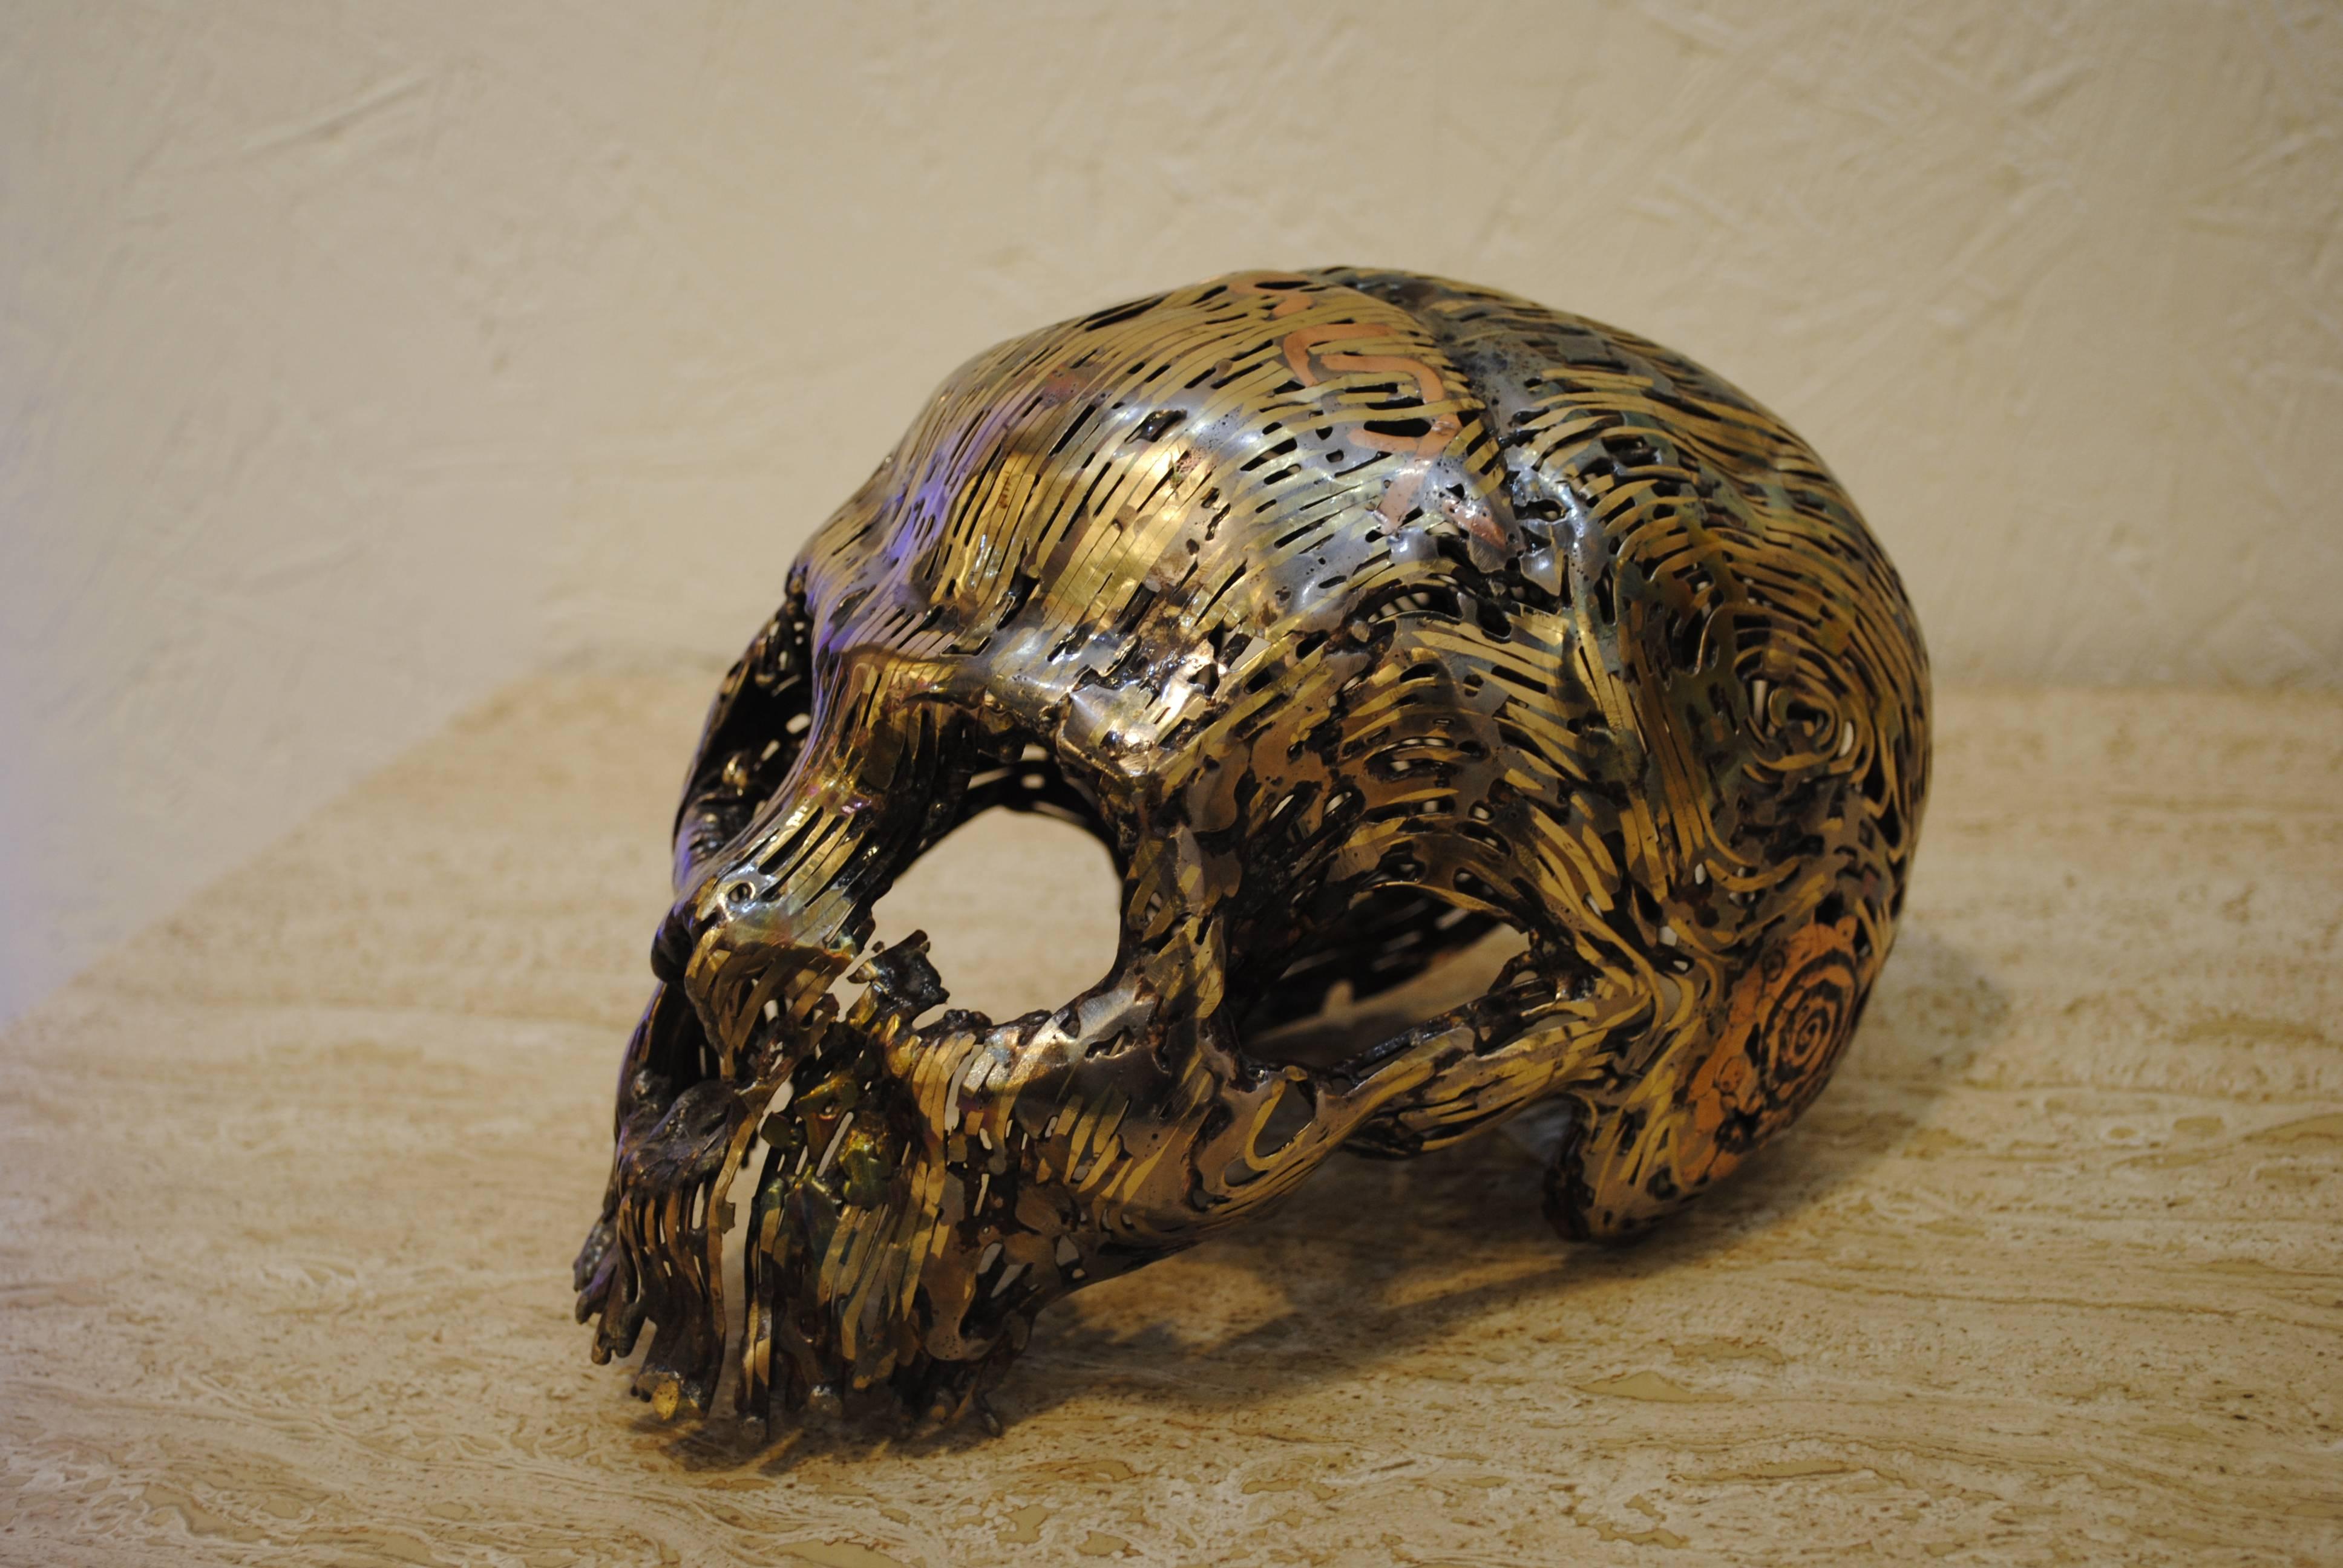 French 'Golgotha' Skull Sculpture by Romain de Souza, France, 2015